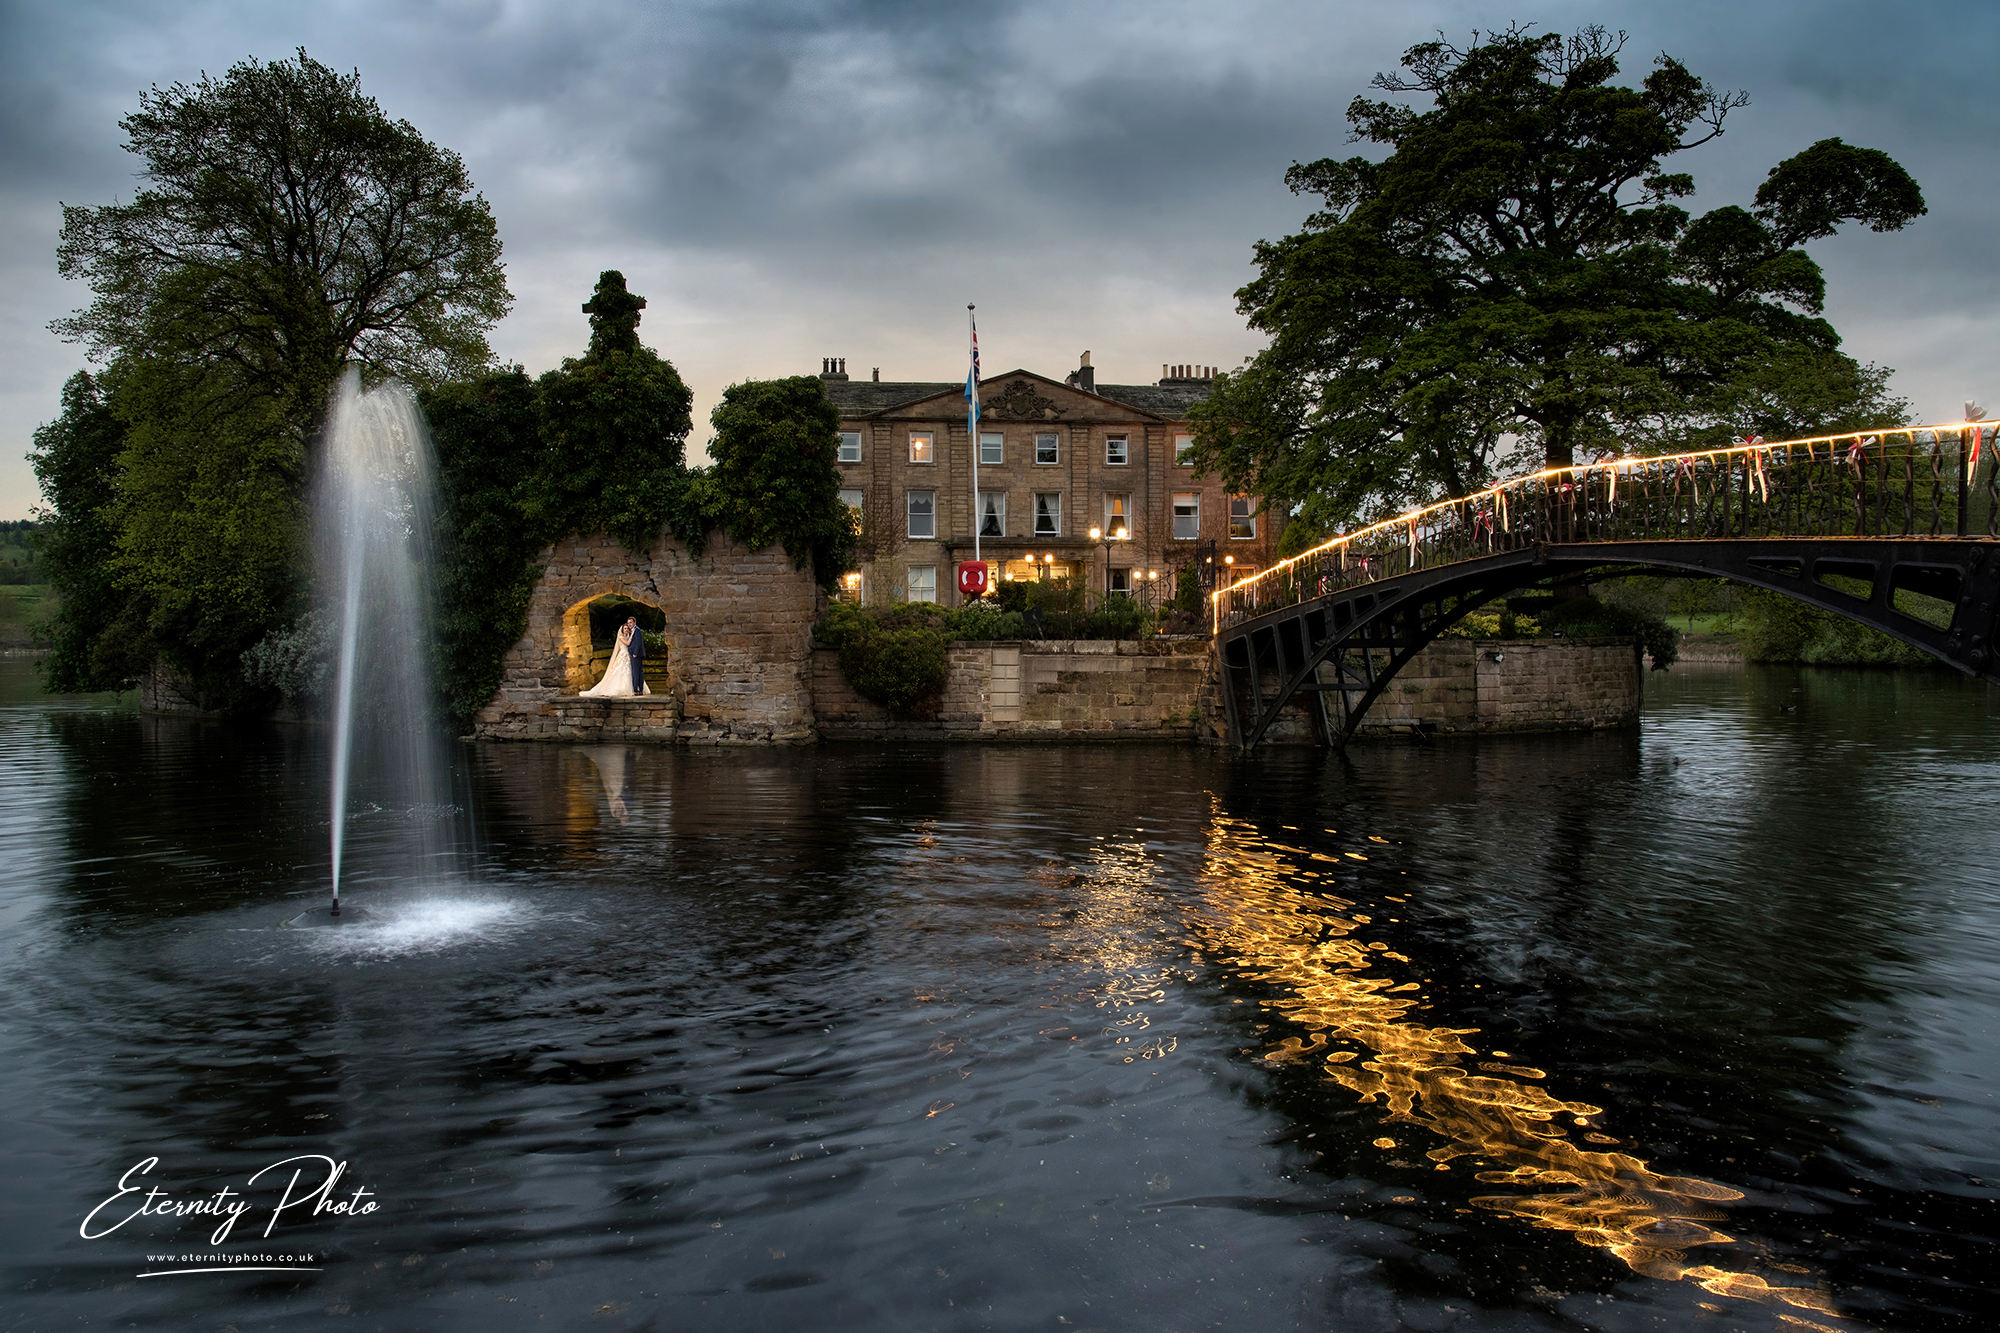 Evening river scene with illuminated bridge and fountain.